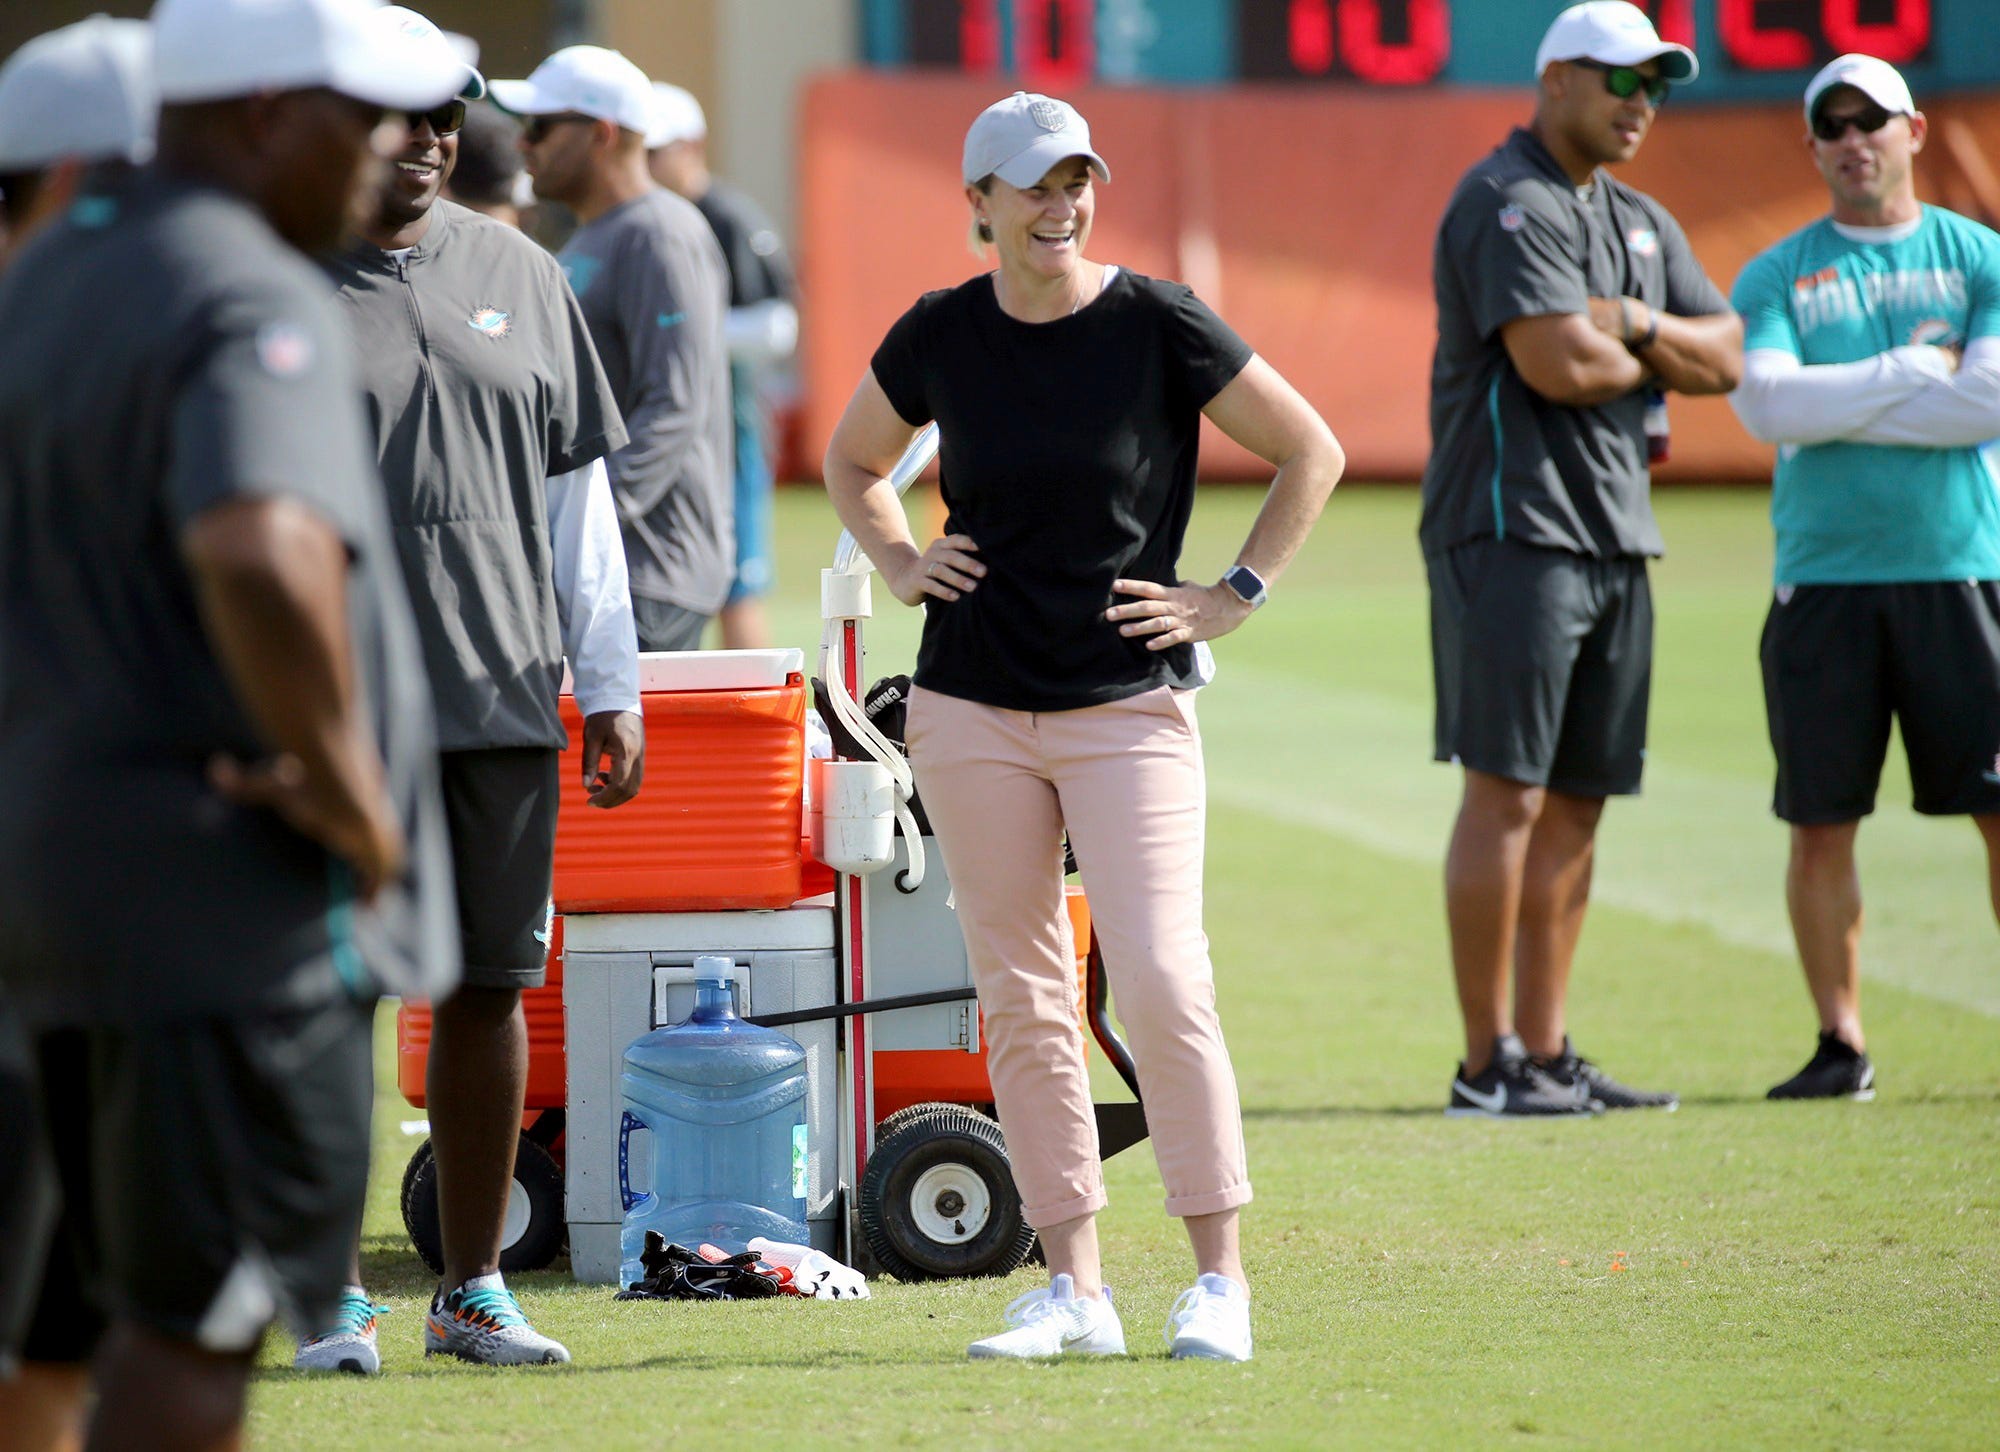 U.S. women's national soccer team coach Jill Ellis shares wisdom with Miami Dolphins